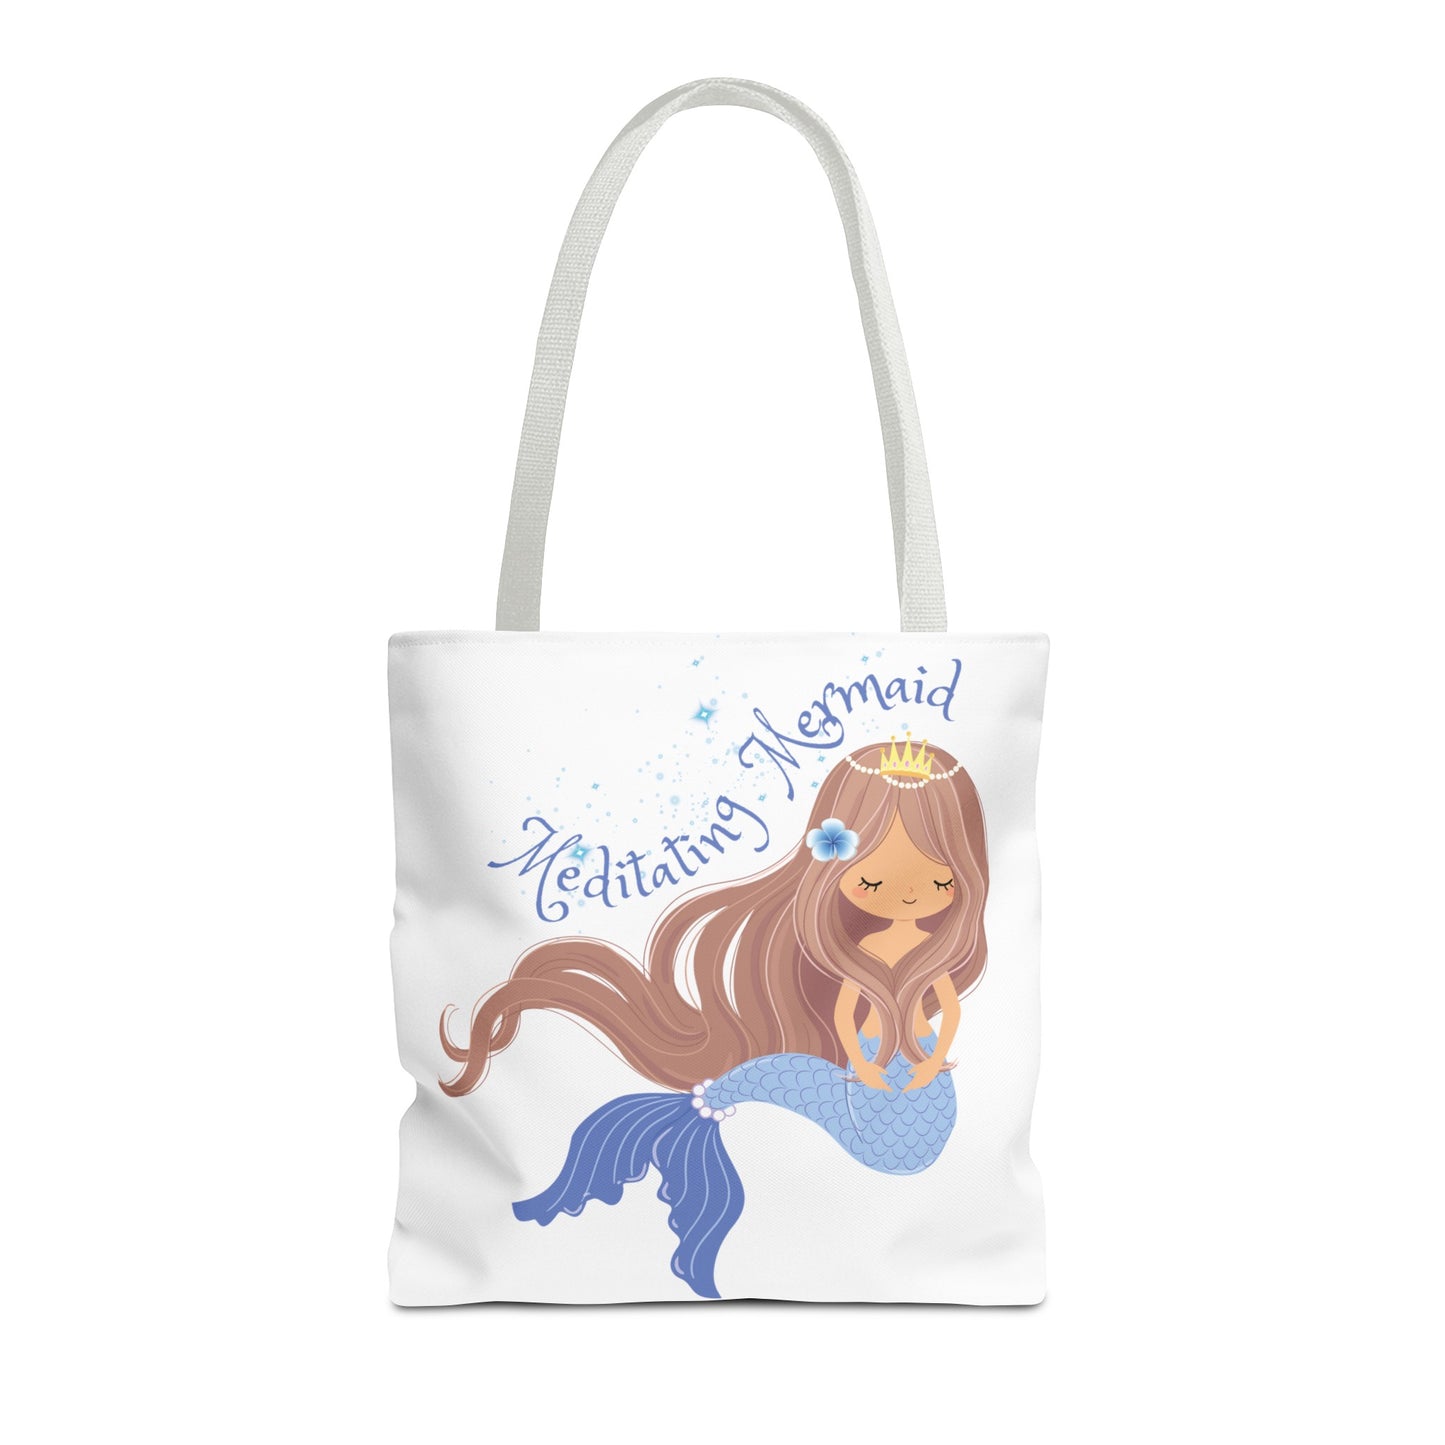 Meditating Mermaid Tote Bag - Perfect Gift For Meditation & Mermaid Lovers